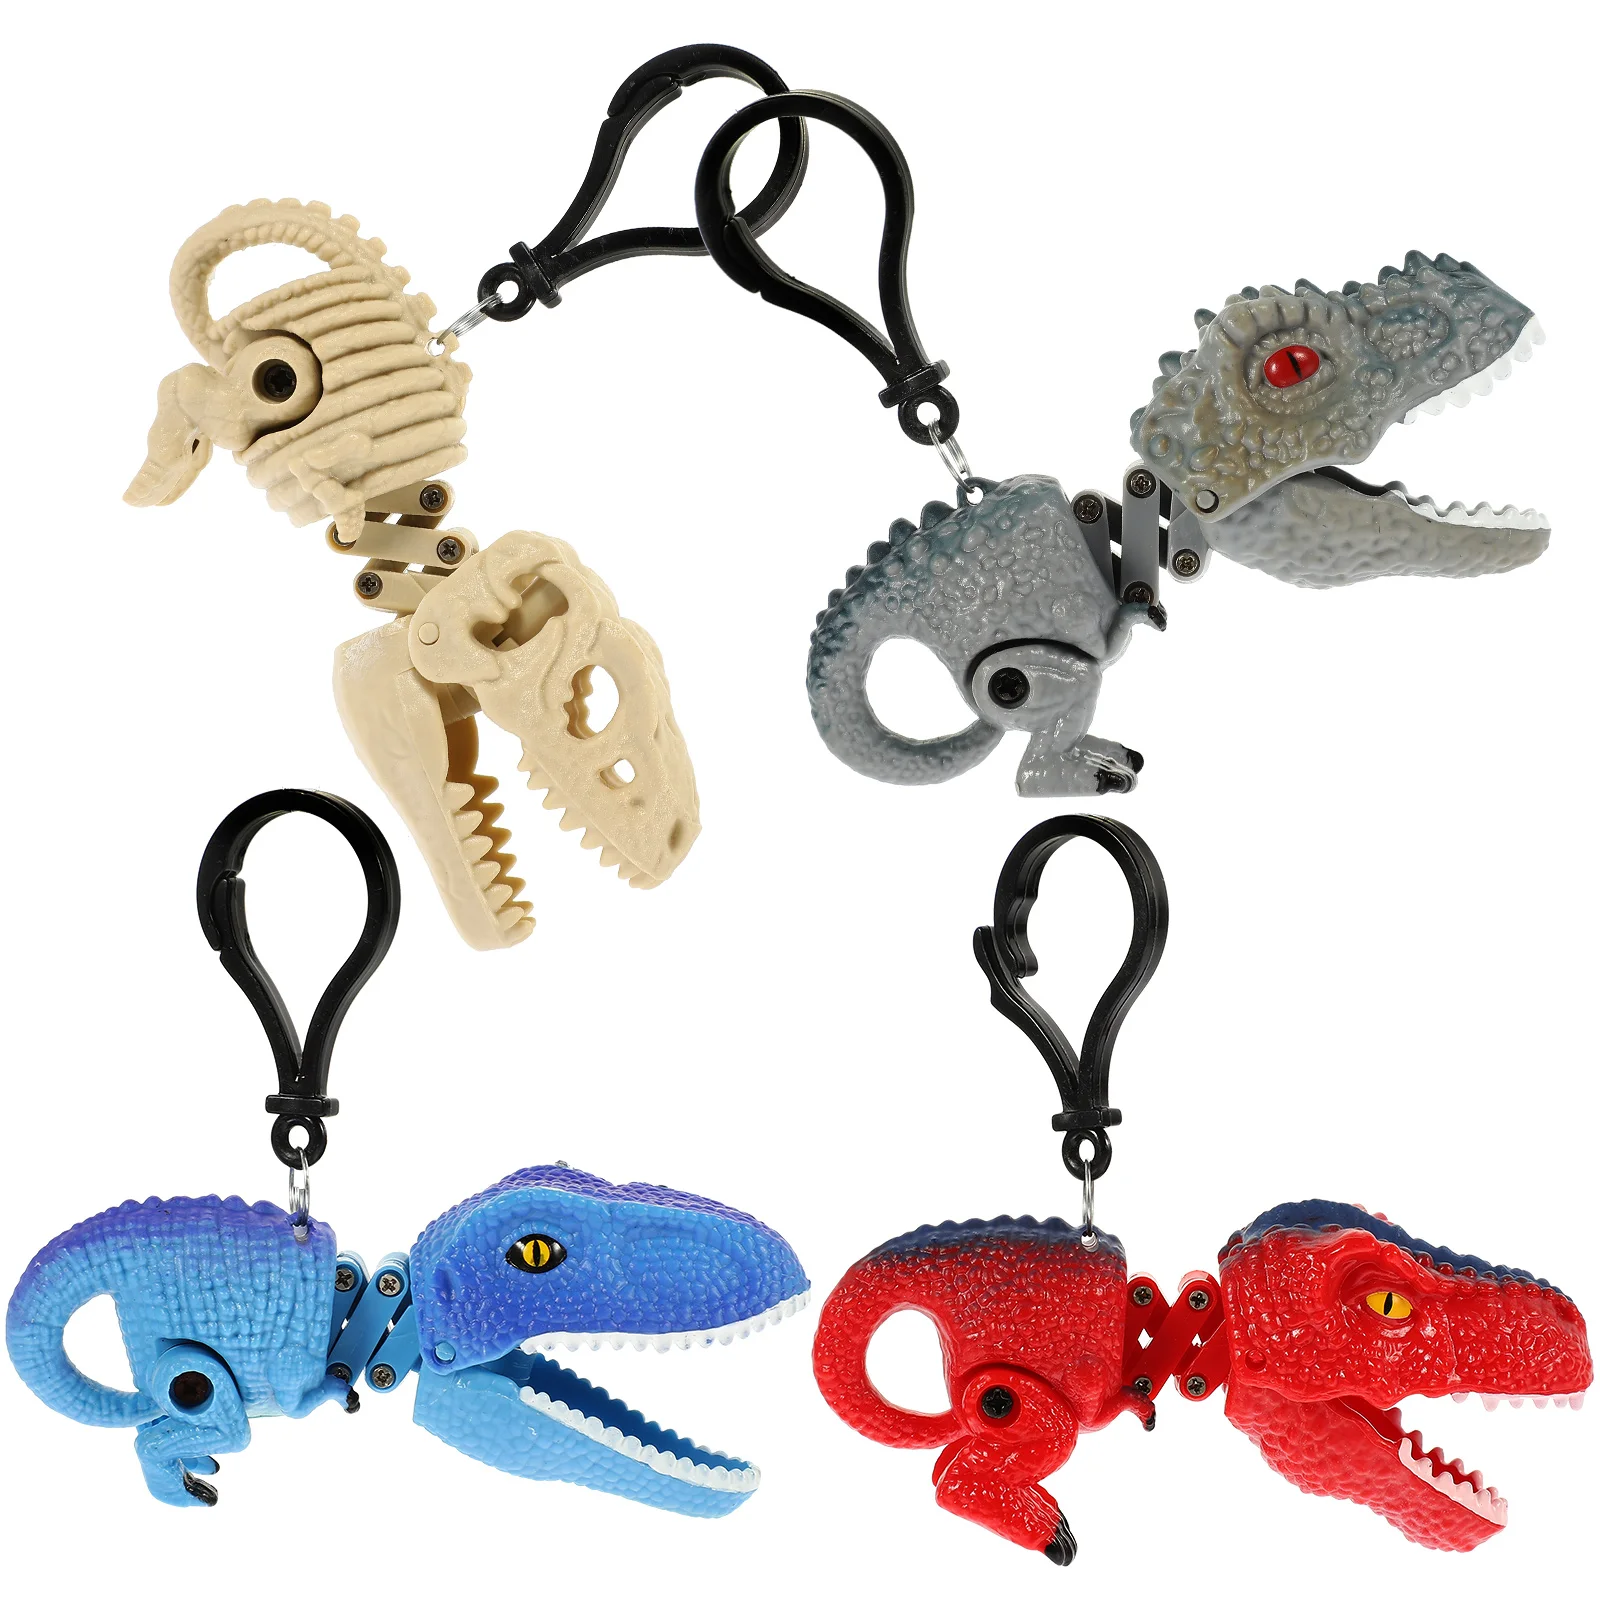 

4pcs Sturdy Decorative Portable Keychains Key Chain Bag Charm Keychain